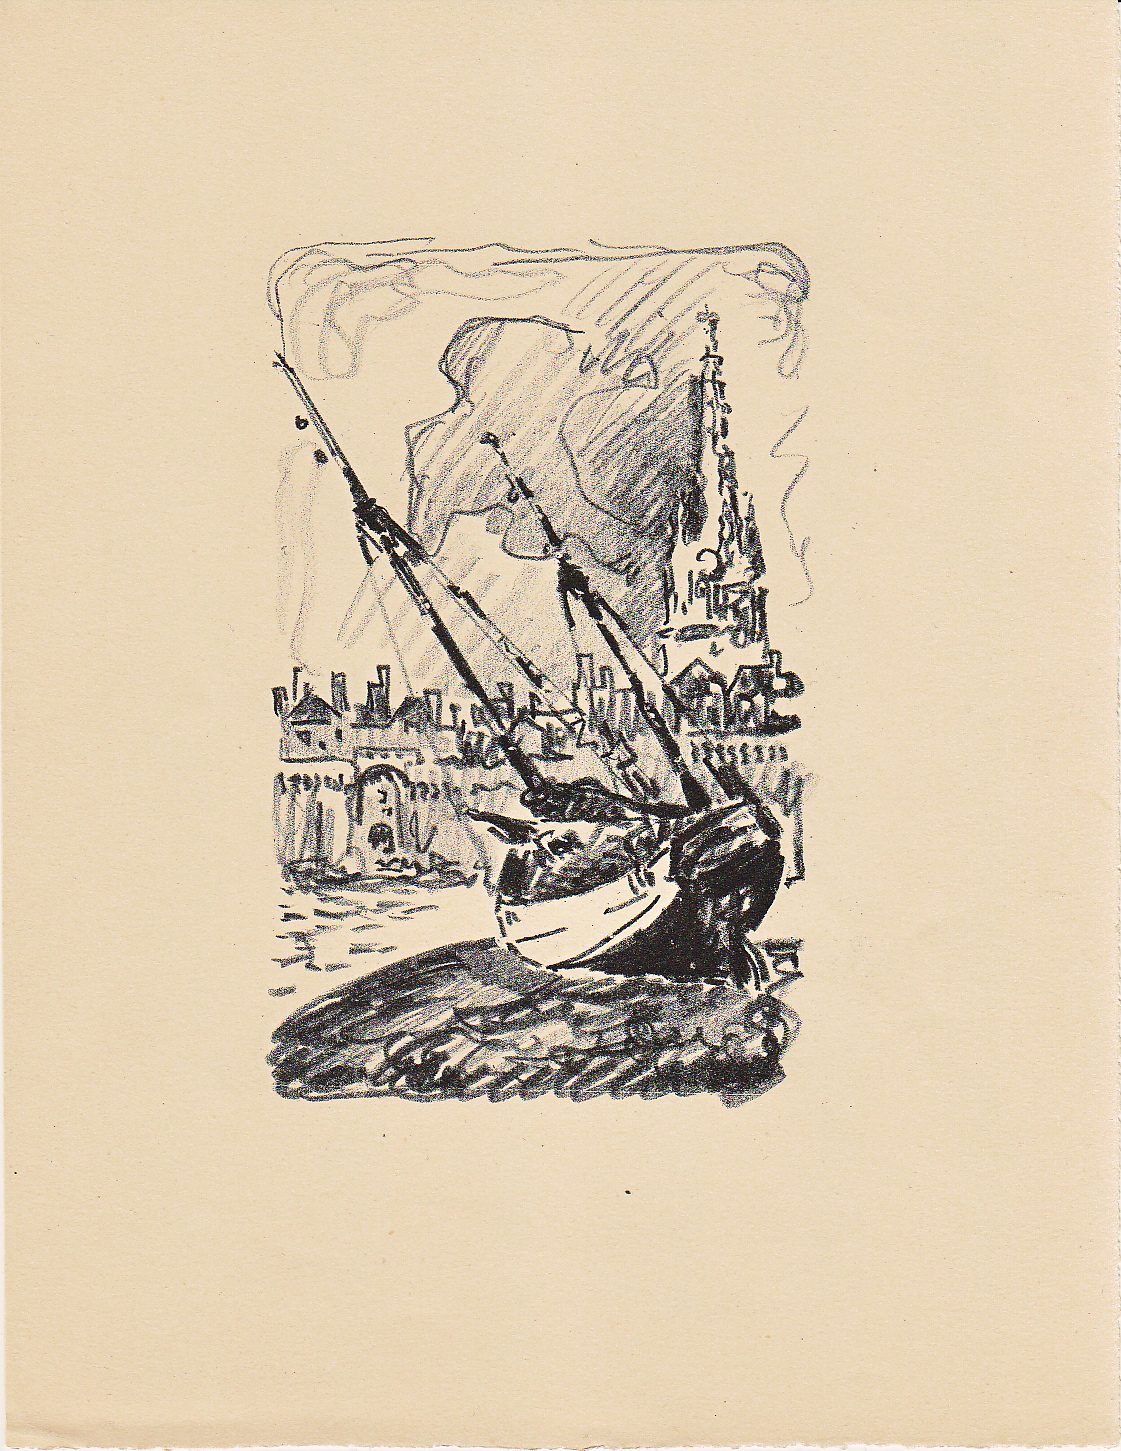 Paul Signac, Saint Malo III, lithograph, 1927